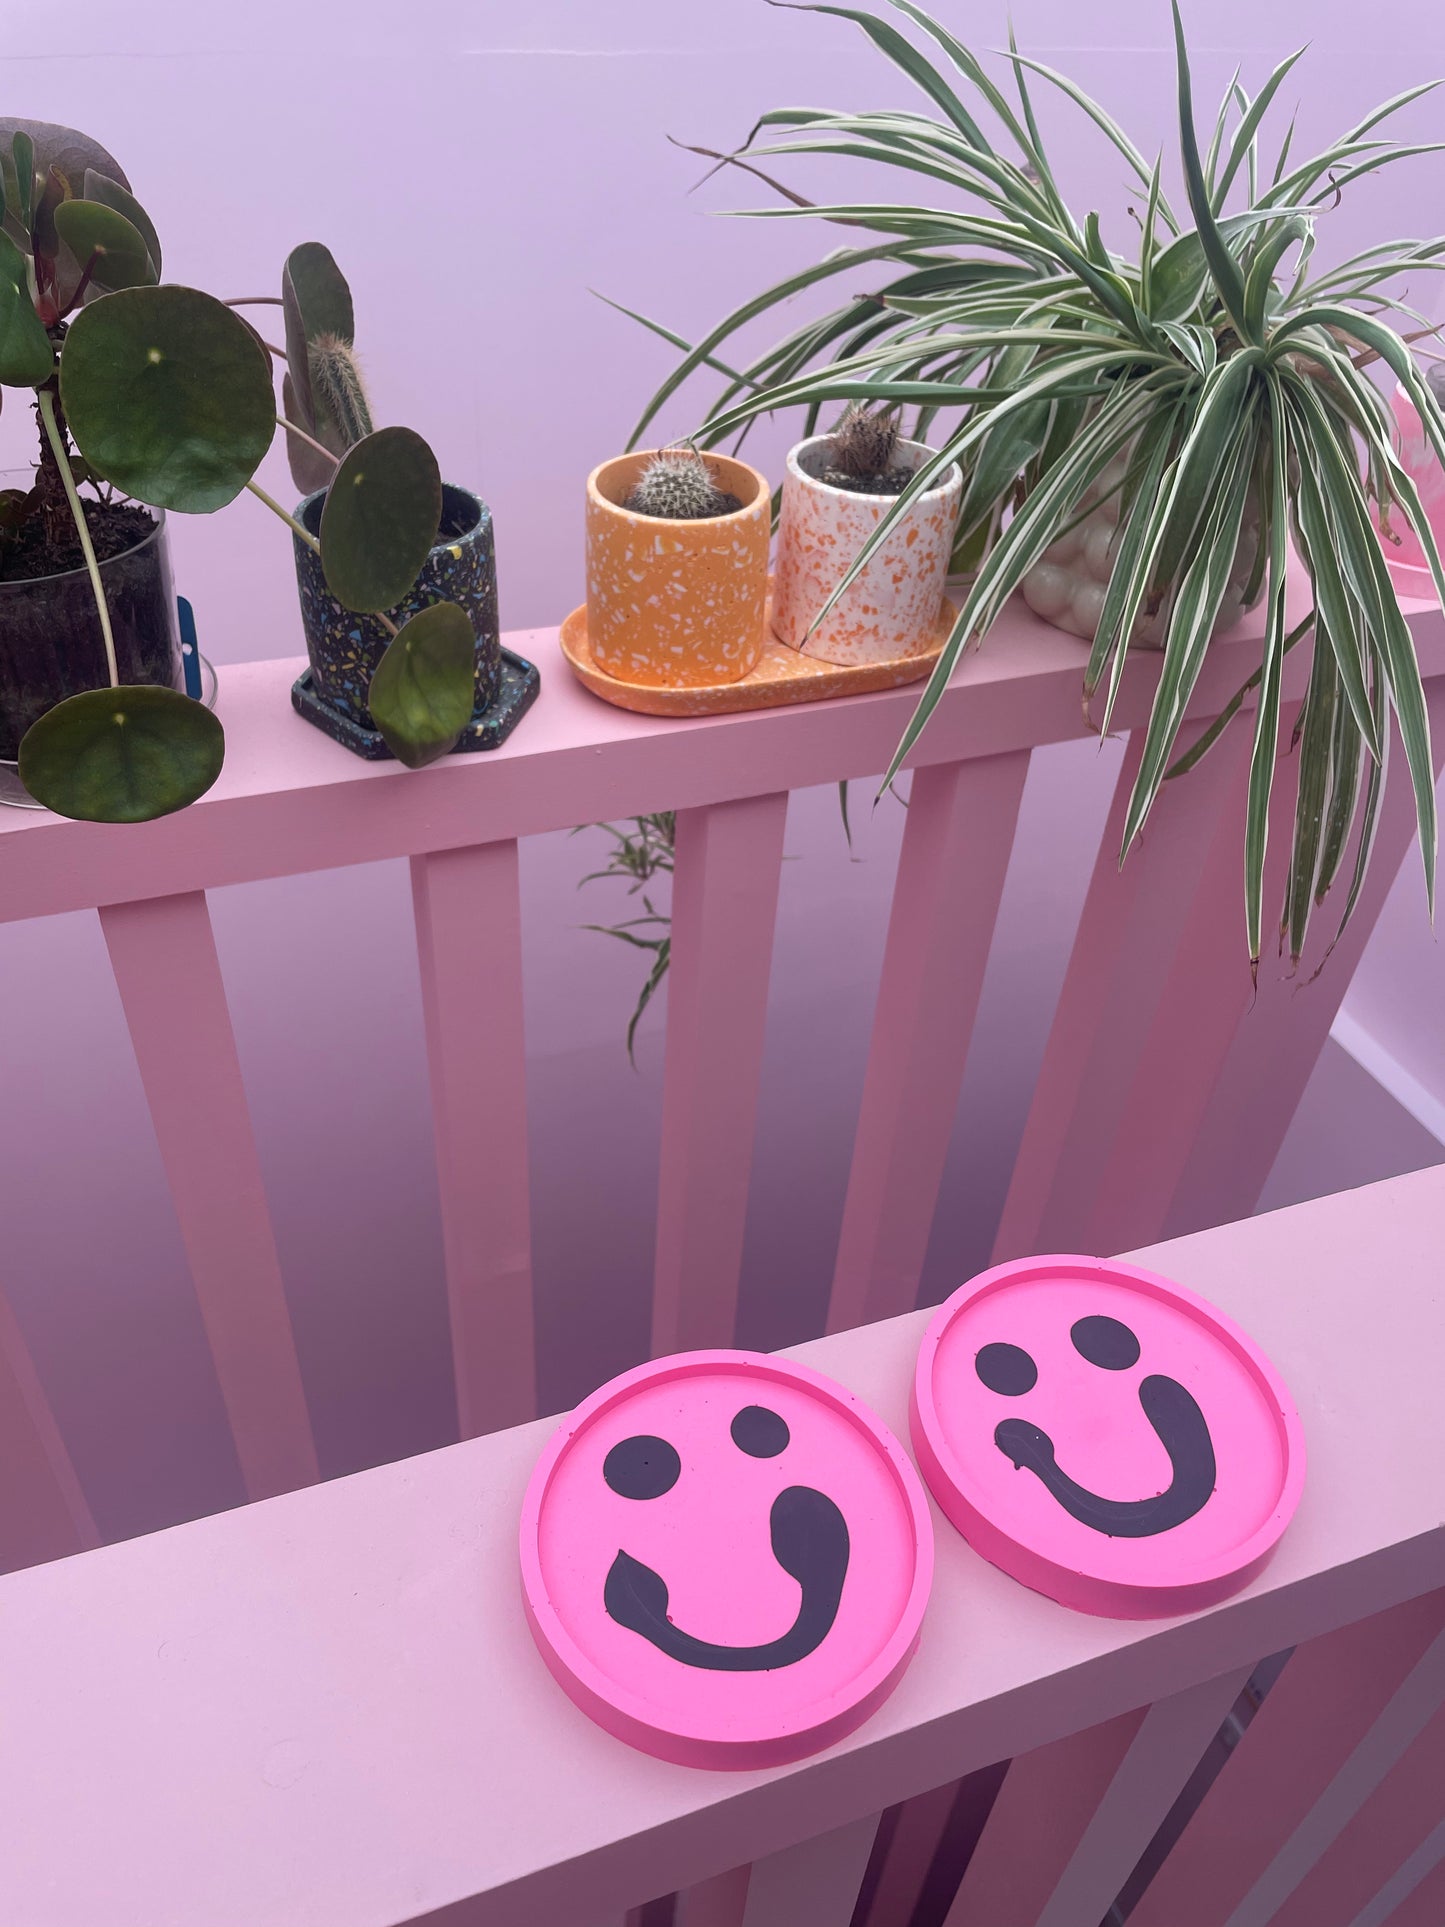 Coaster Set - Smiley - Pink & Black